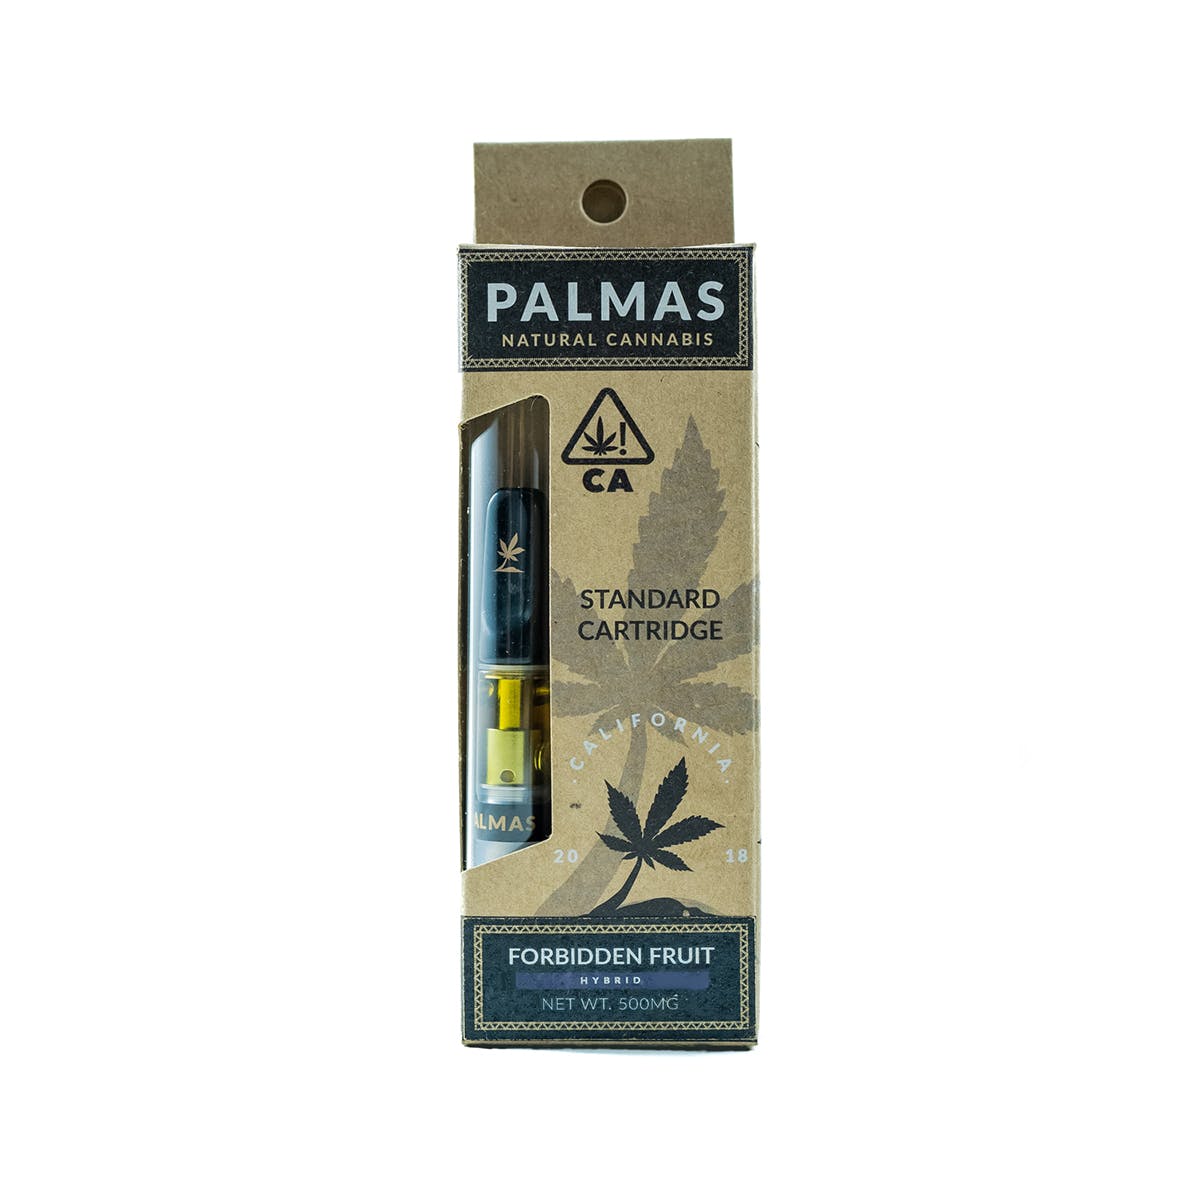 concentrate-palmas-cannabis-palmas-standard-cartridge-forbidden-fruit